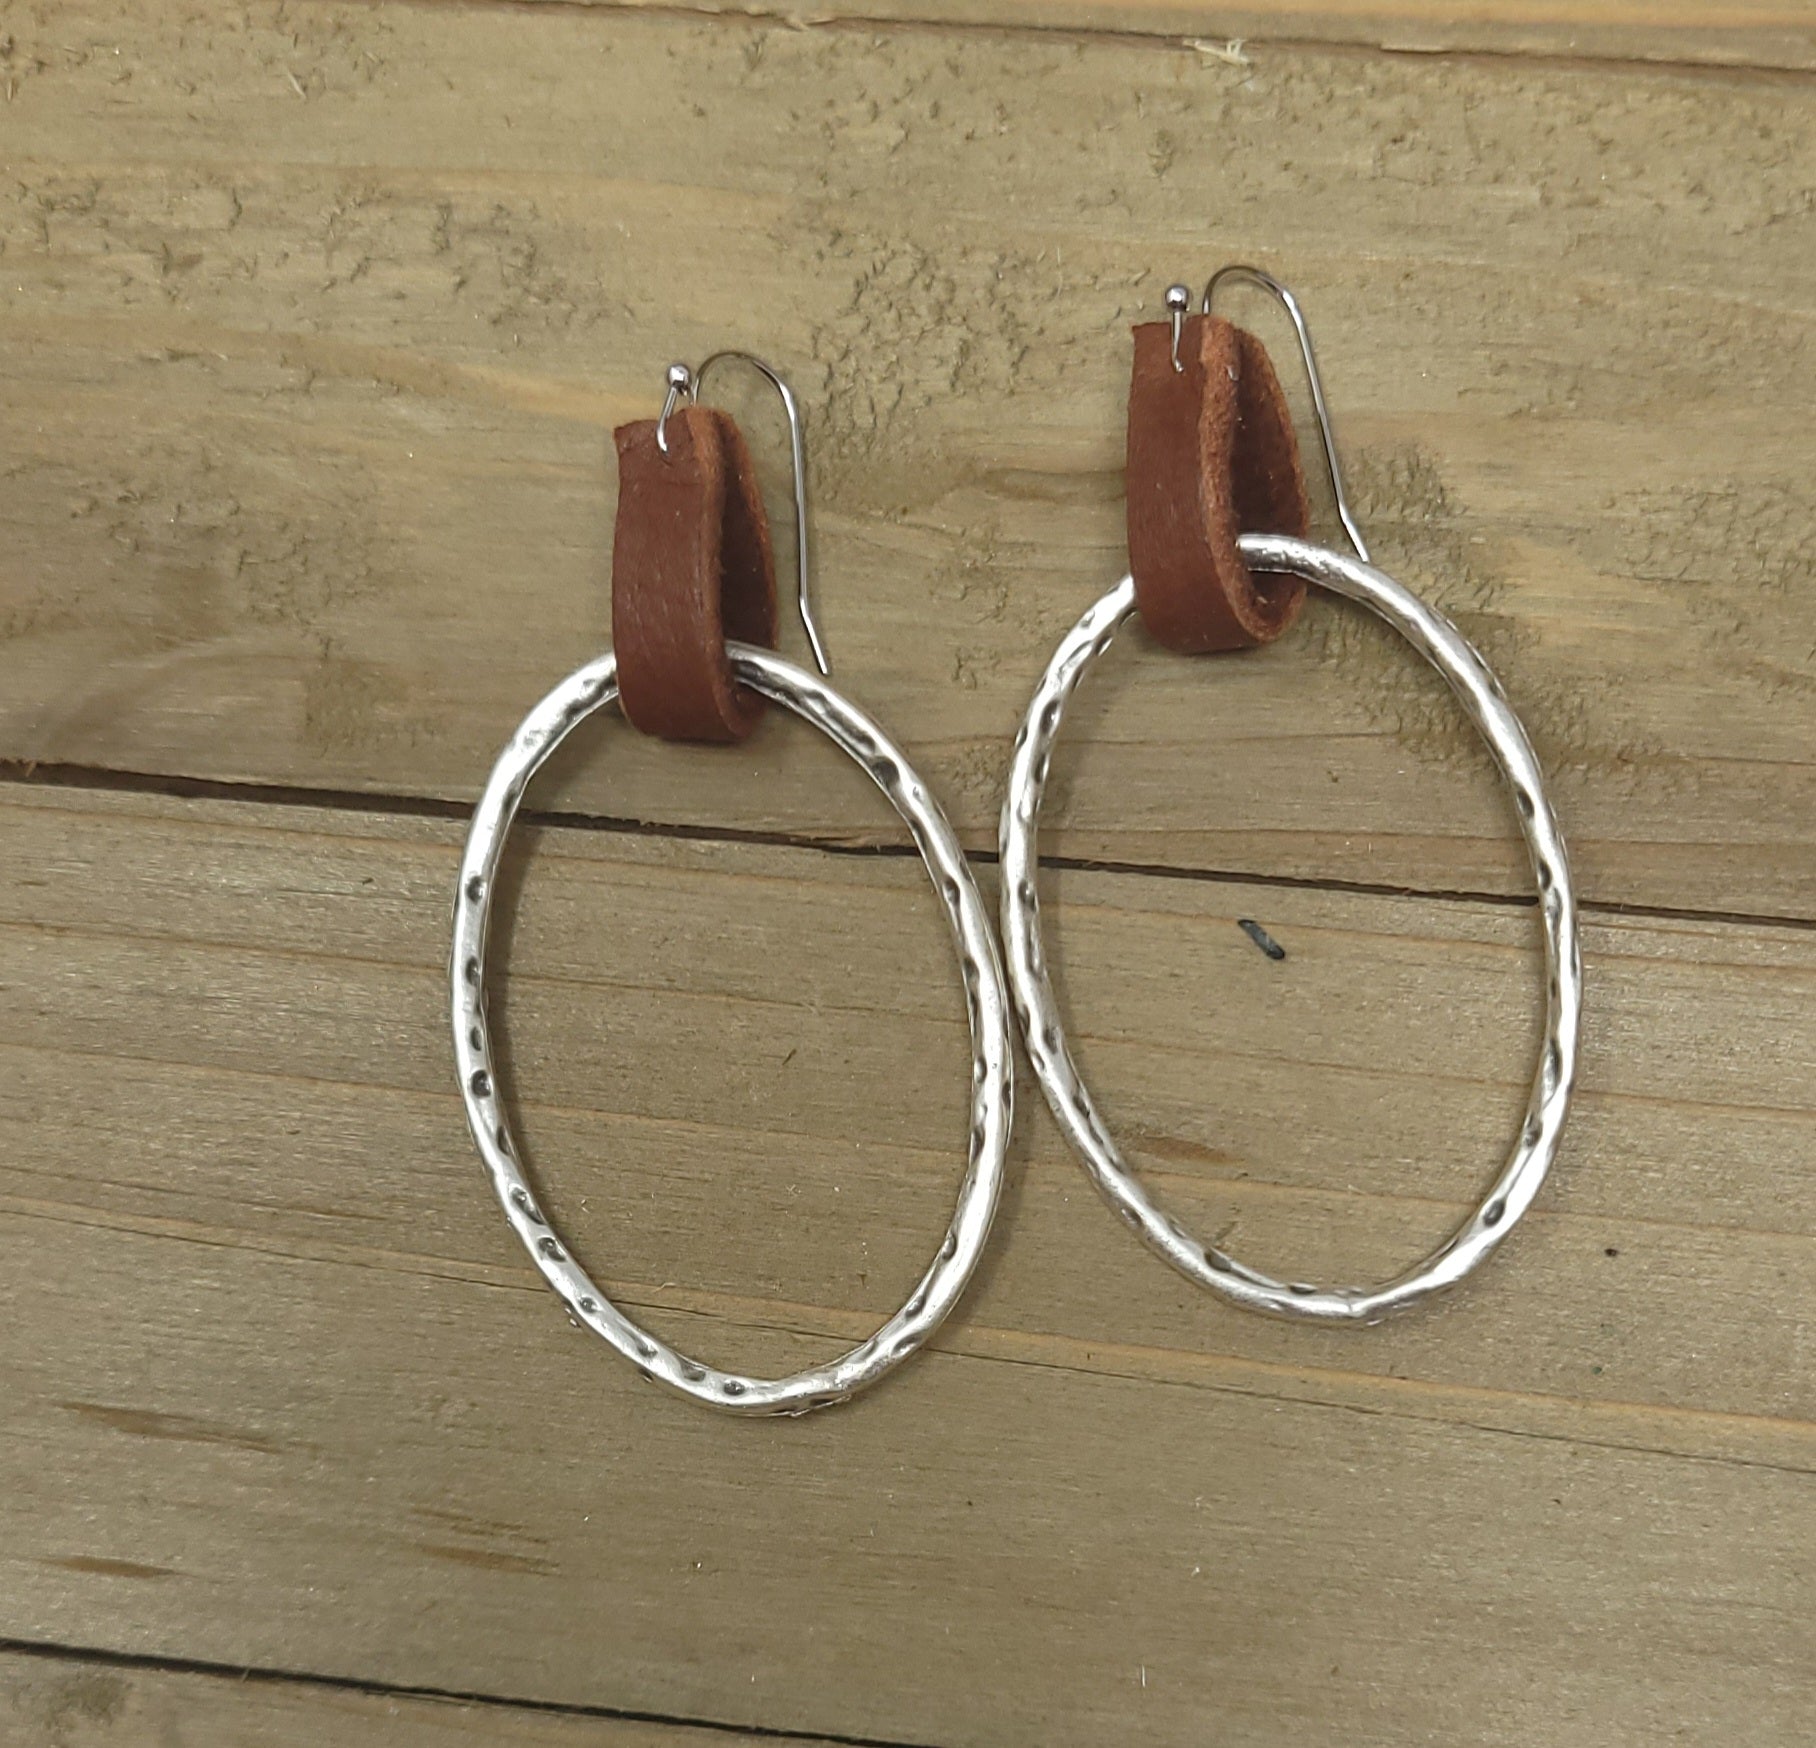 Antique silver rustic organic hoop earing with leather loop